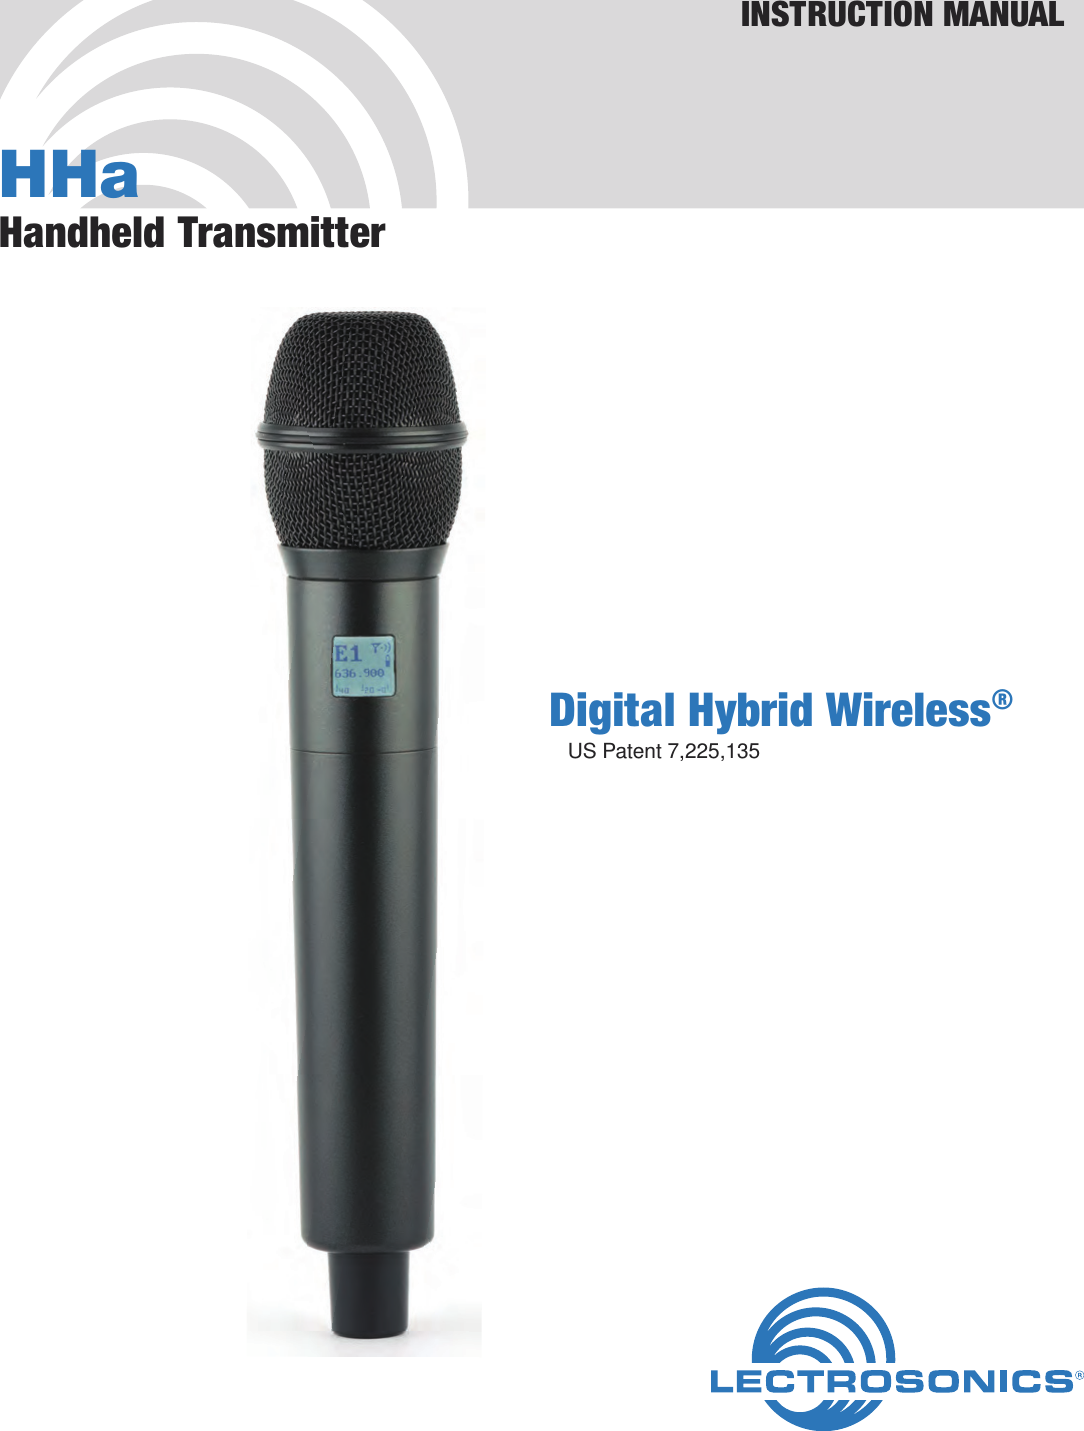 Rio Rancho, NM, USAwww.lectrosonics.comINSTRUCTION MANUALHHaHandheld TransmitterDigital Hybrid Wireless®US Patent 7,225,135